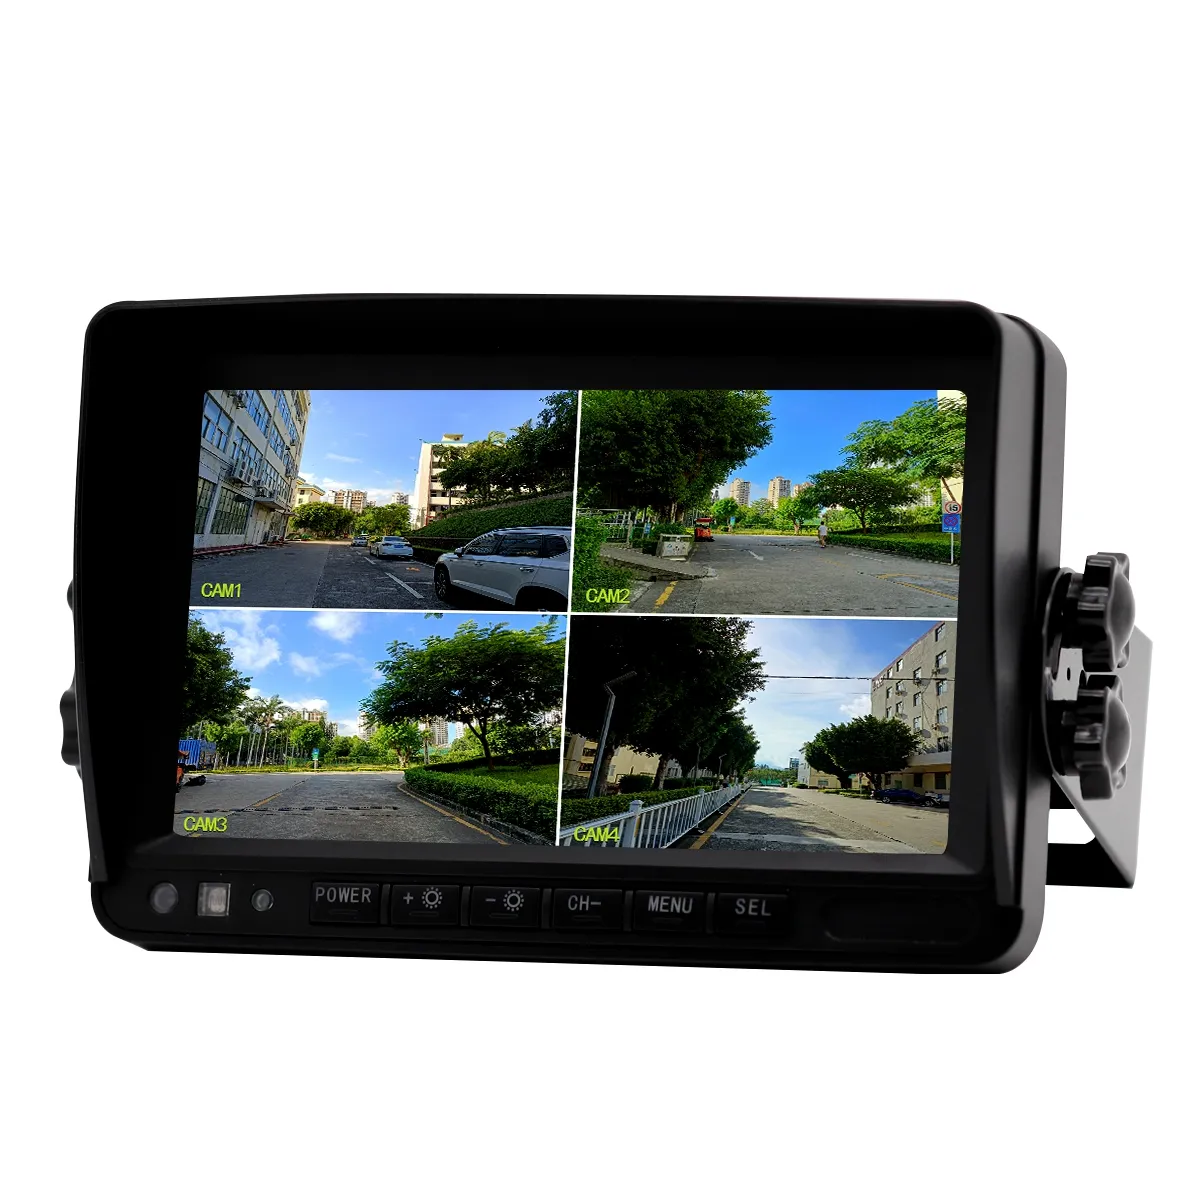 High quality 7 inch lcd tv monitor 4 split/quad screens car monitor video player